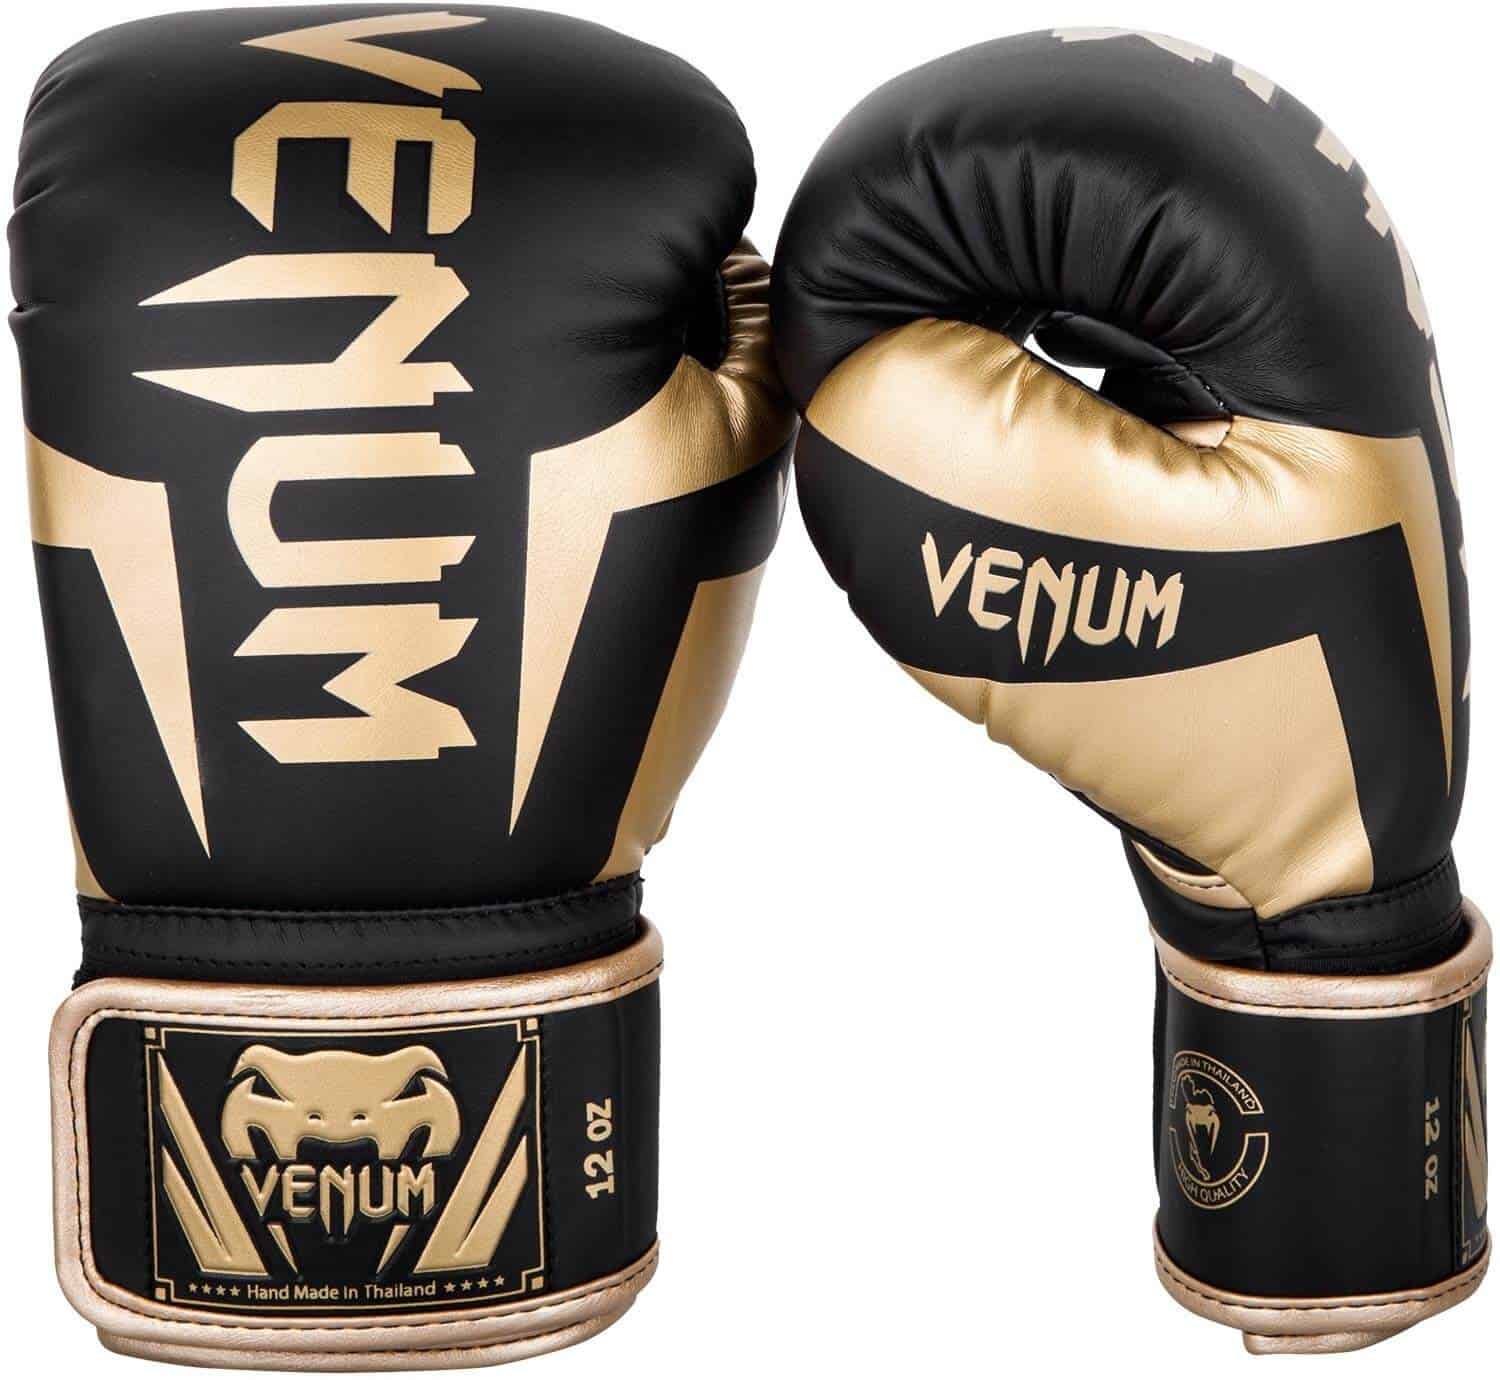 5+ Best Boxing Gloves To Buy In Australia For 2020